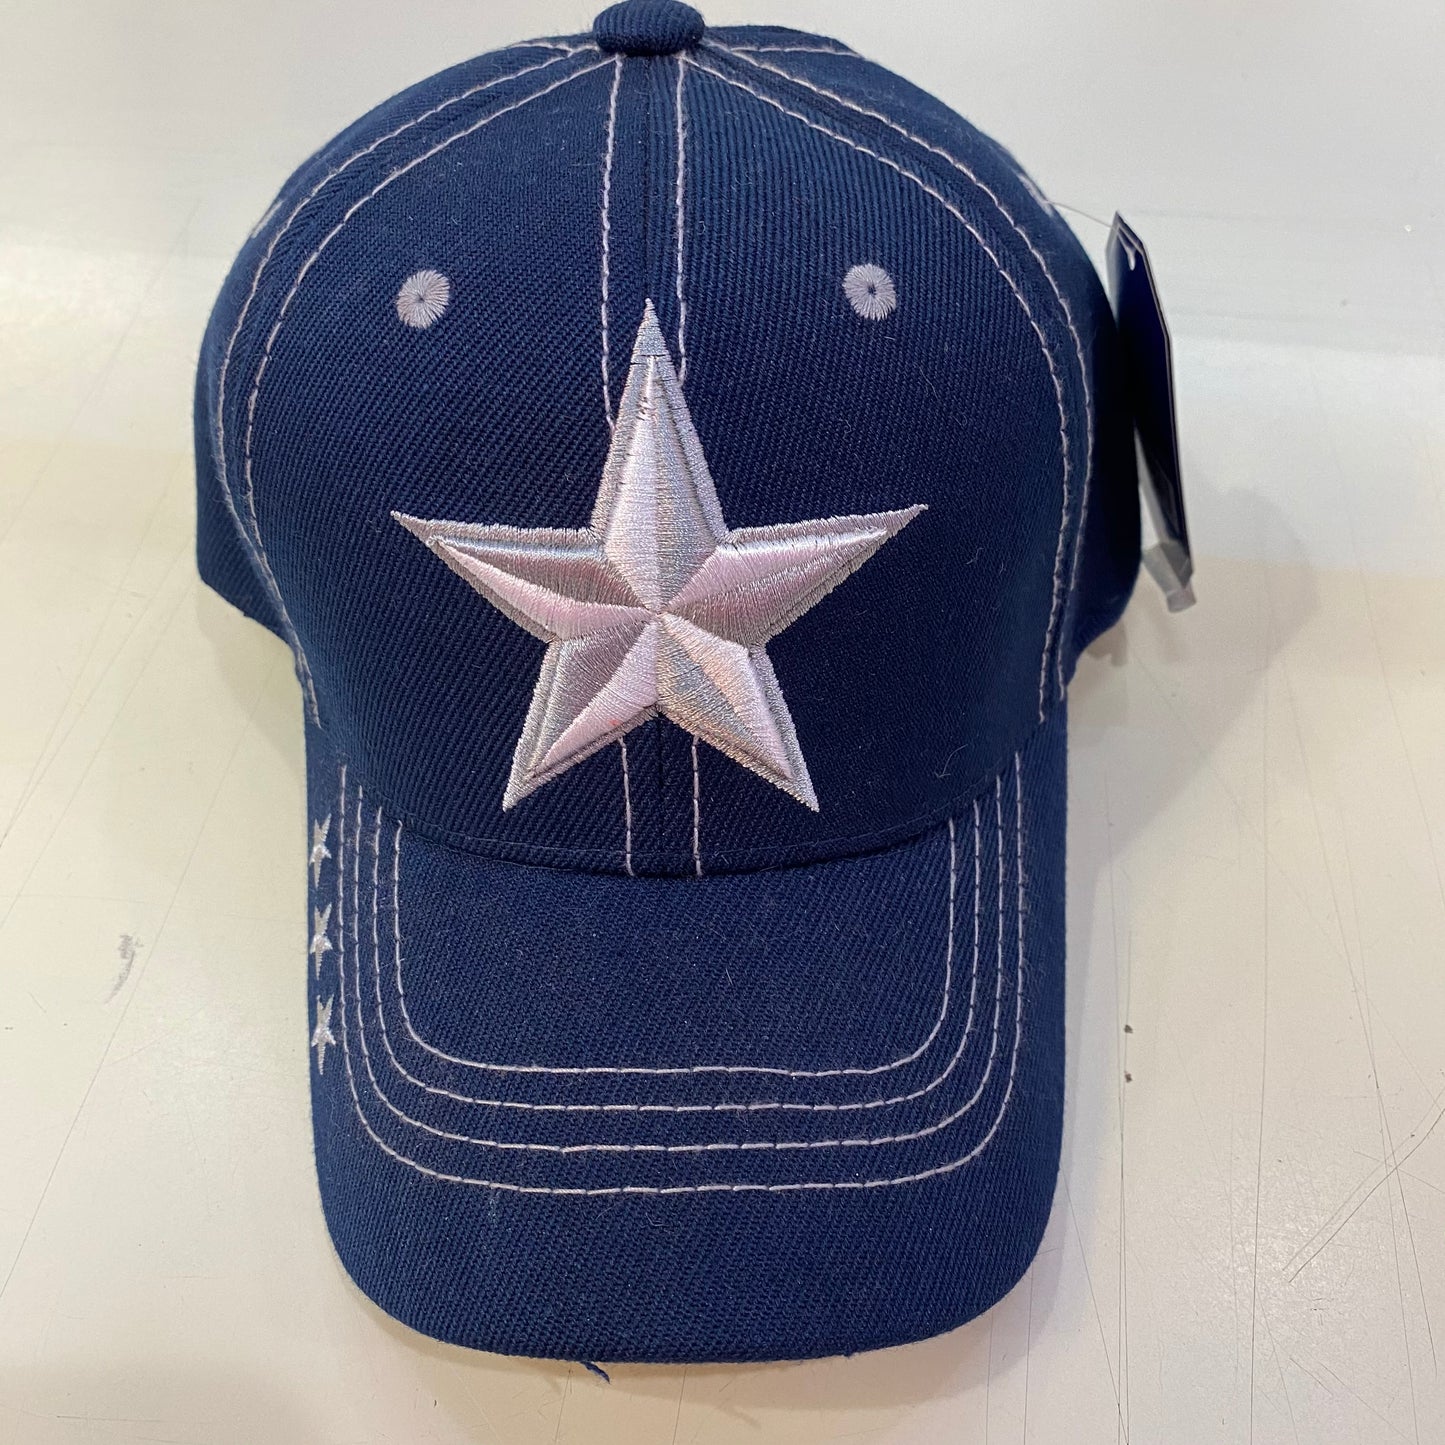 Kids Cowboys Star Baseball Cap